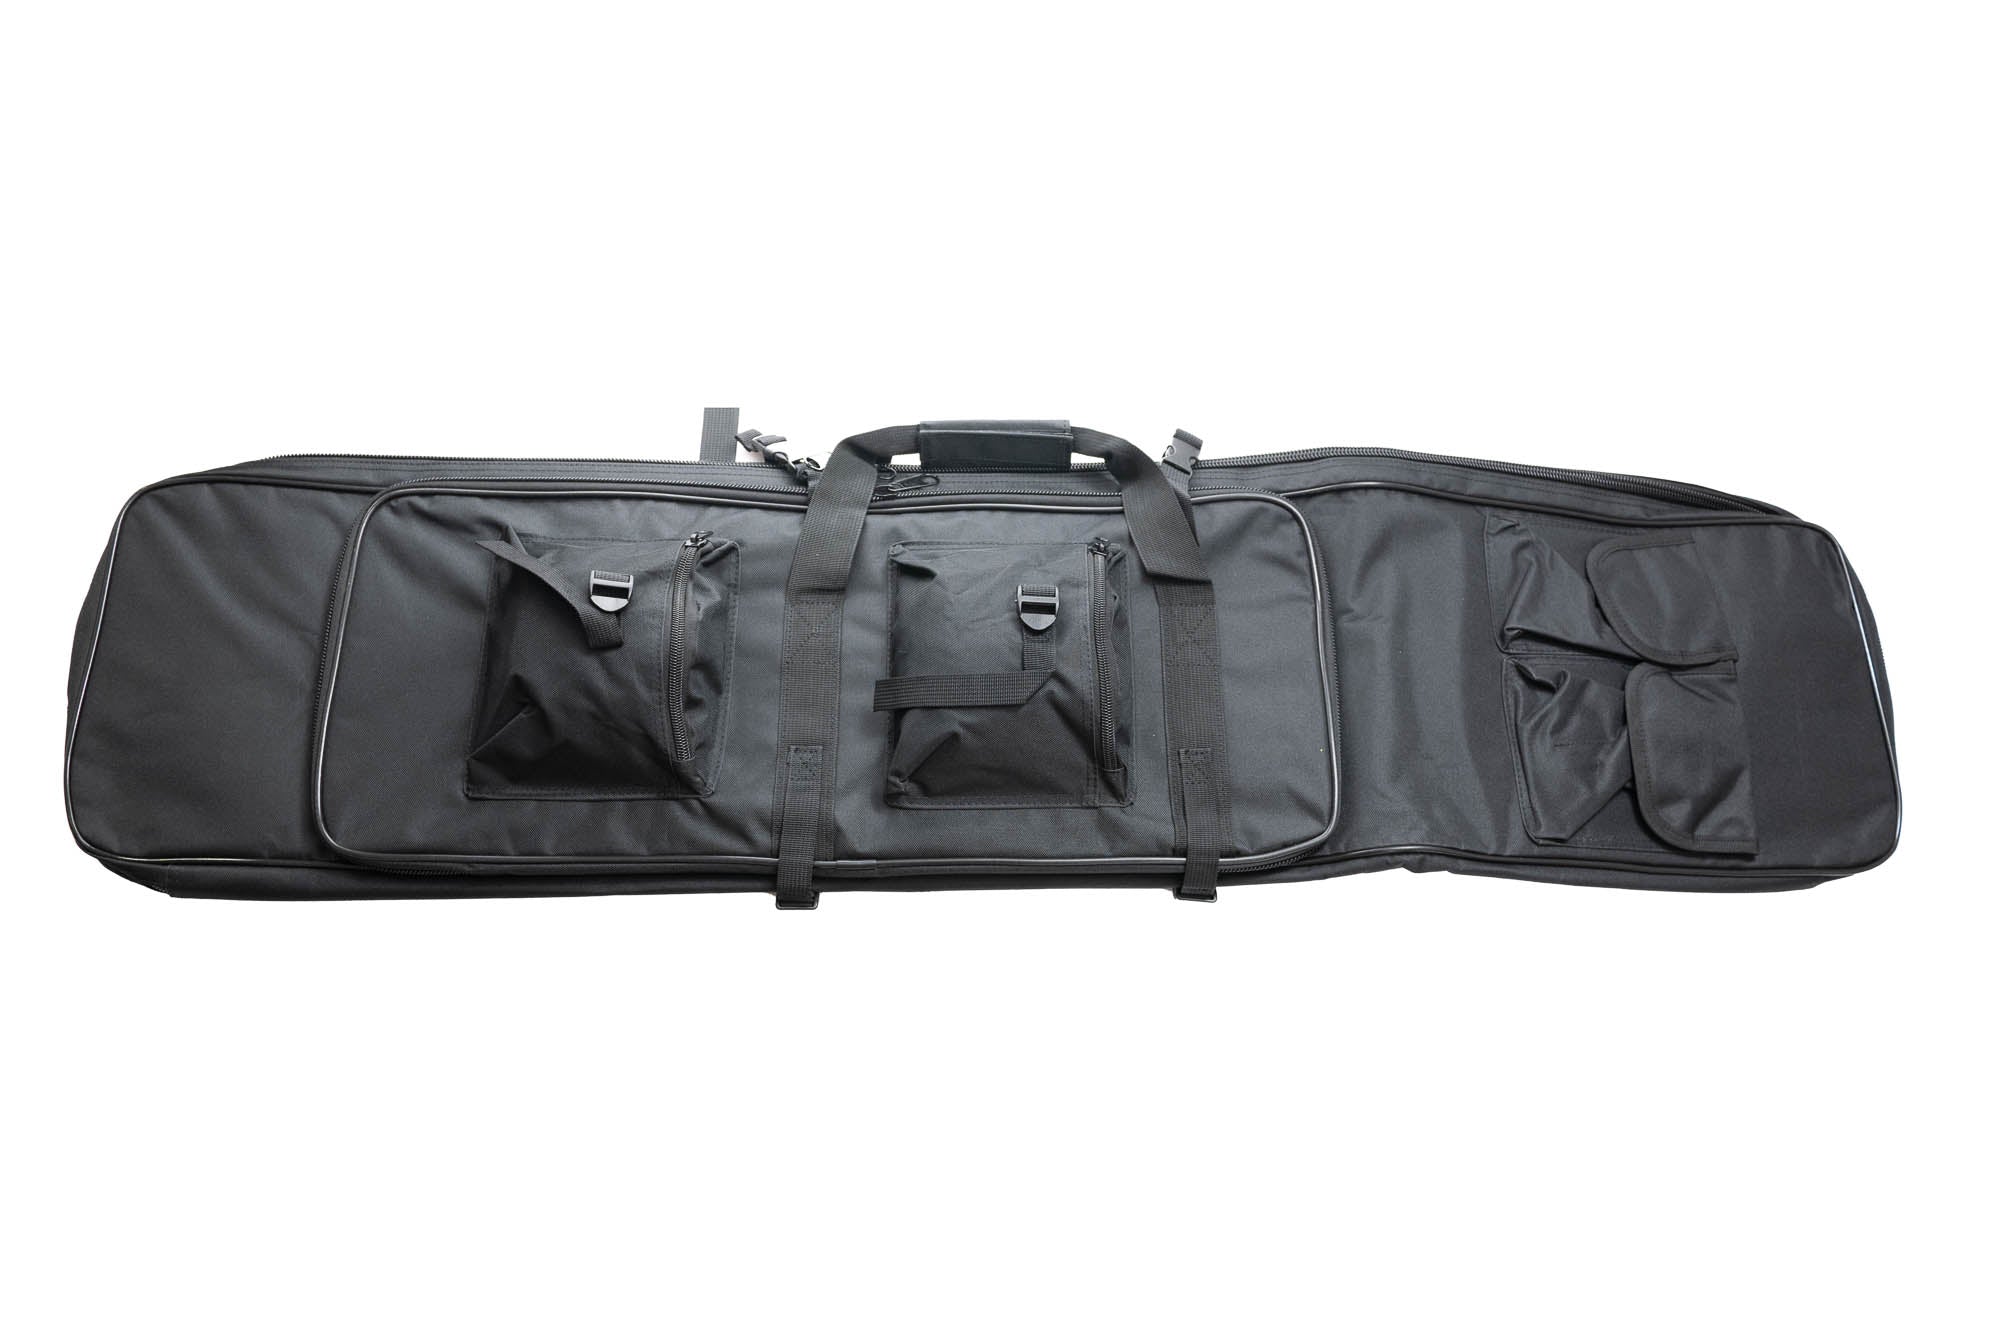 SOETAC Dual Rifle Carrying Case Gun Bag